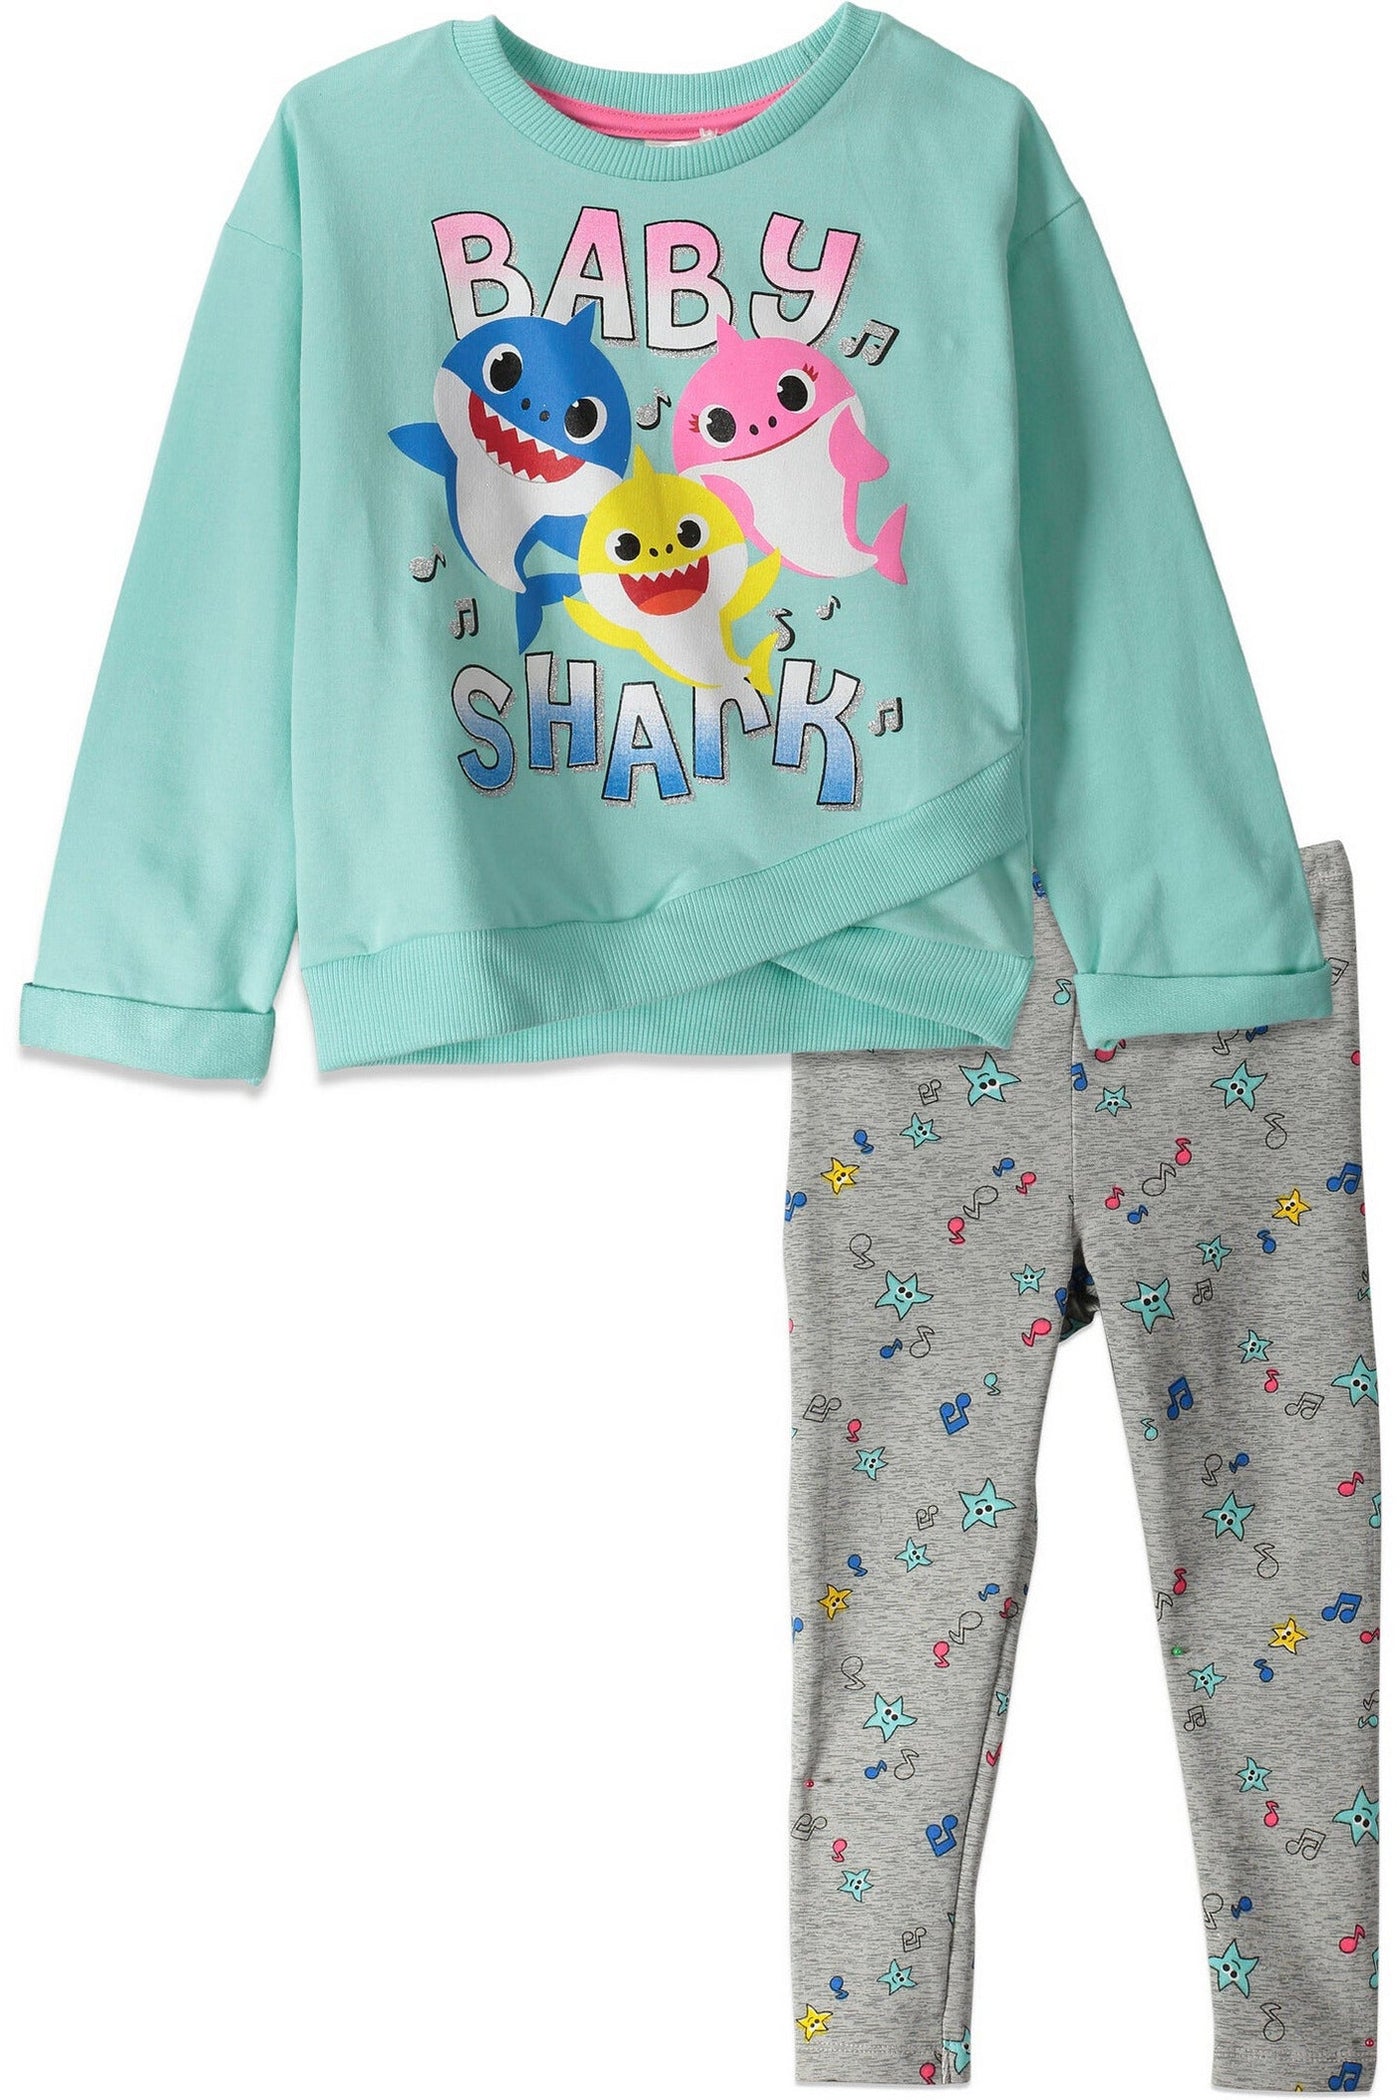 Pinkfong Baby Shark Crossover Conjunto de camiseta gráfica y leggings de manga larga